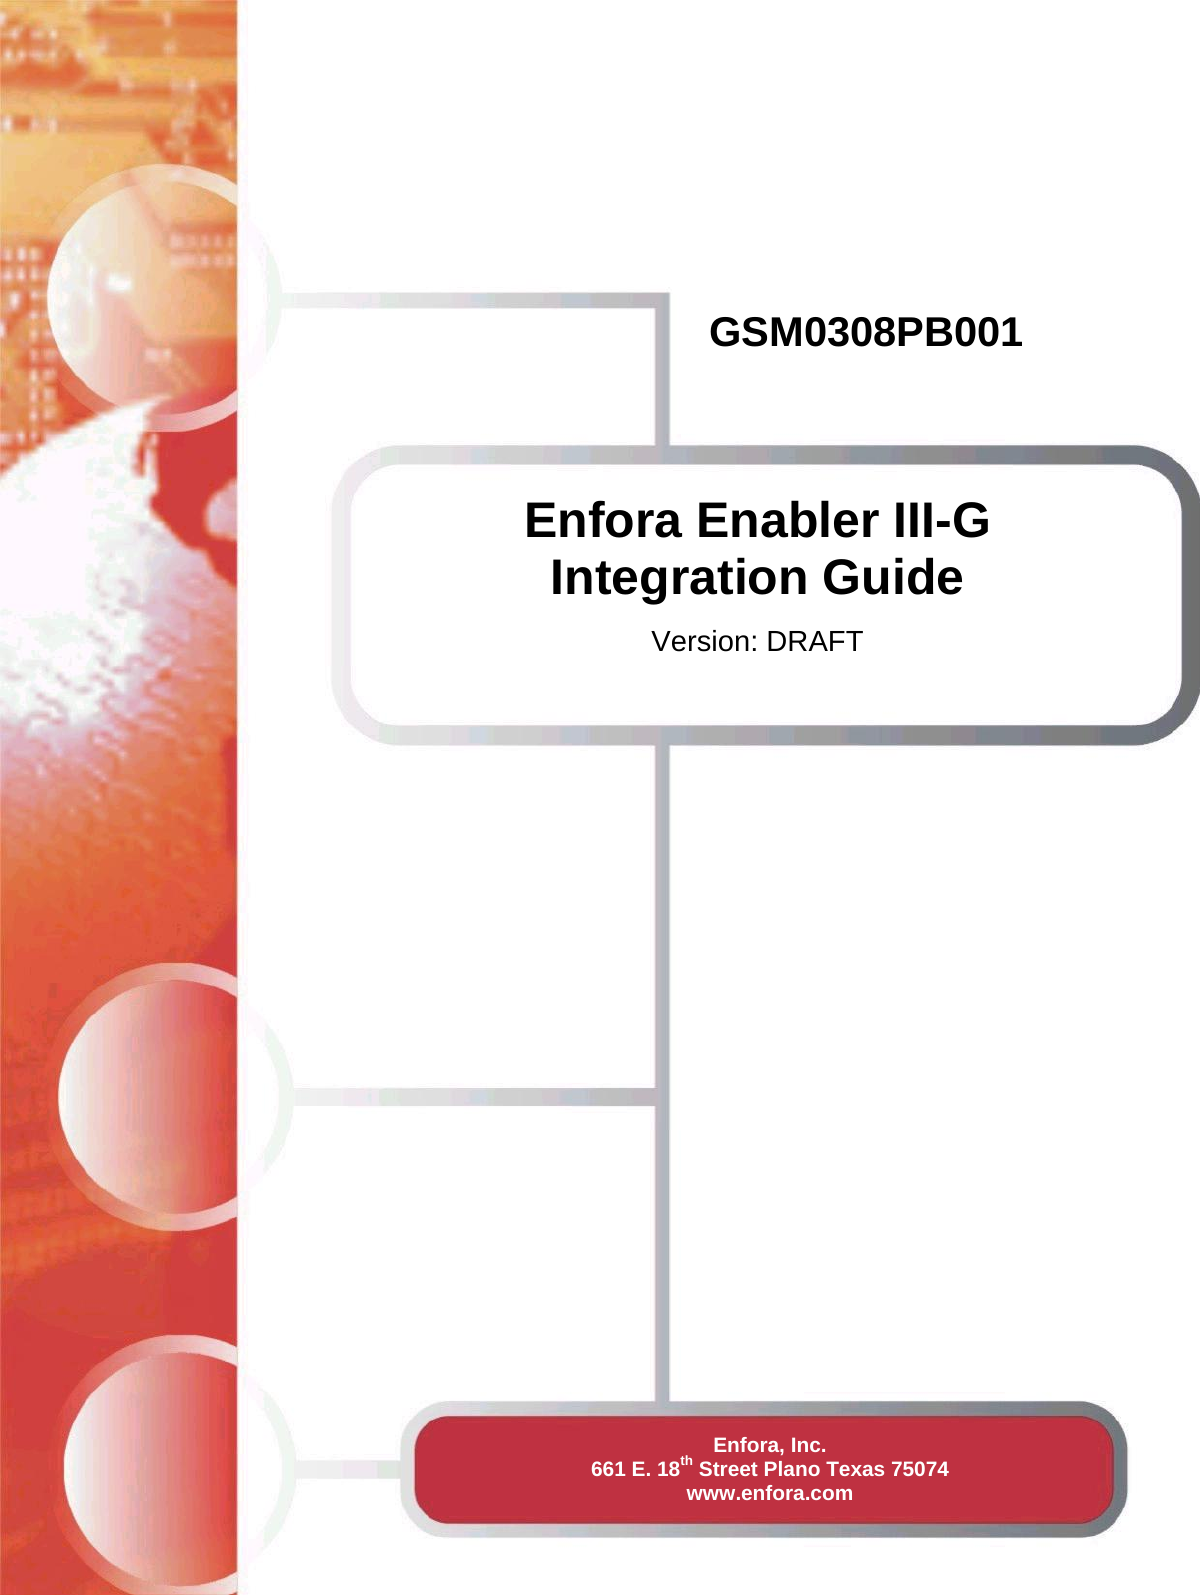 GSM0308PB001 Enfora, Inc.   661 E. 18th Street Plano Texas 75074   www.enfora.com Enfora Enabler III-G  Integration Guide  Version: DRAFT 